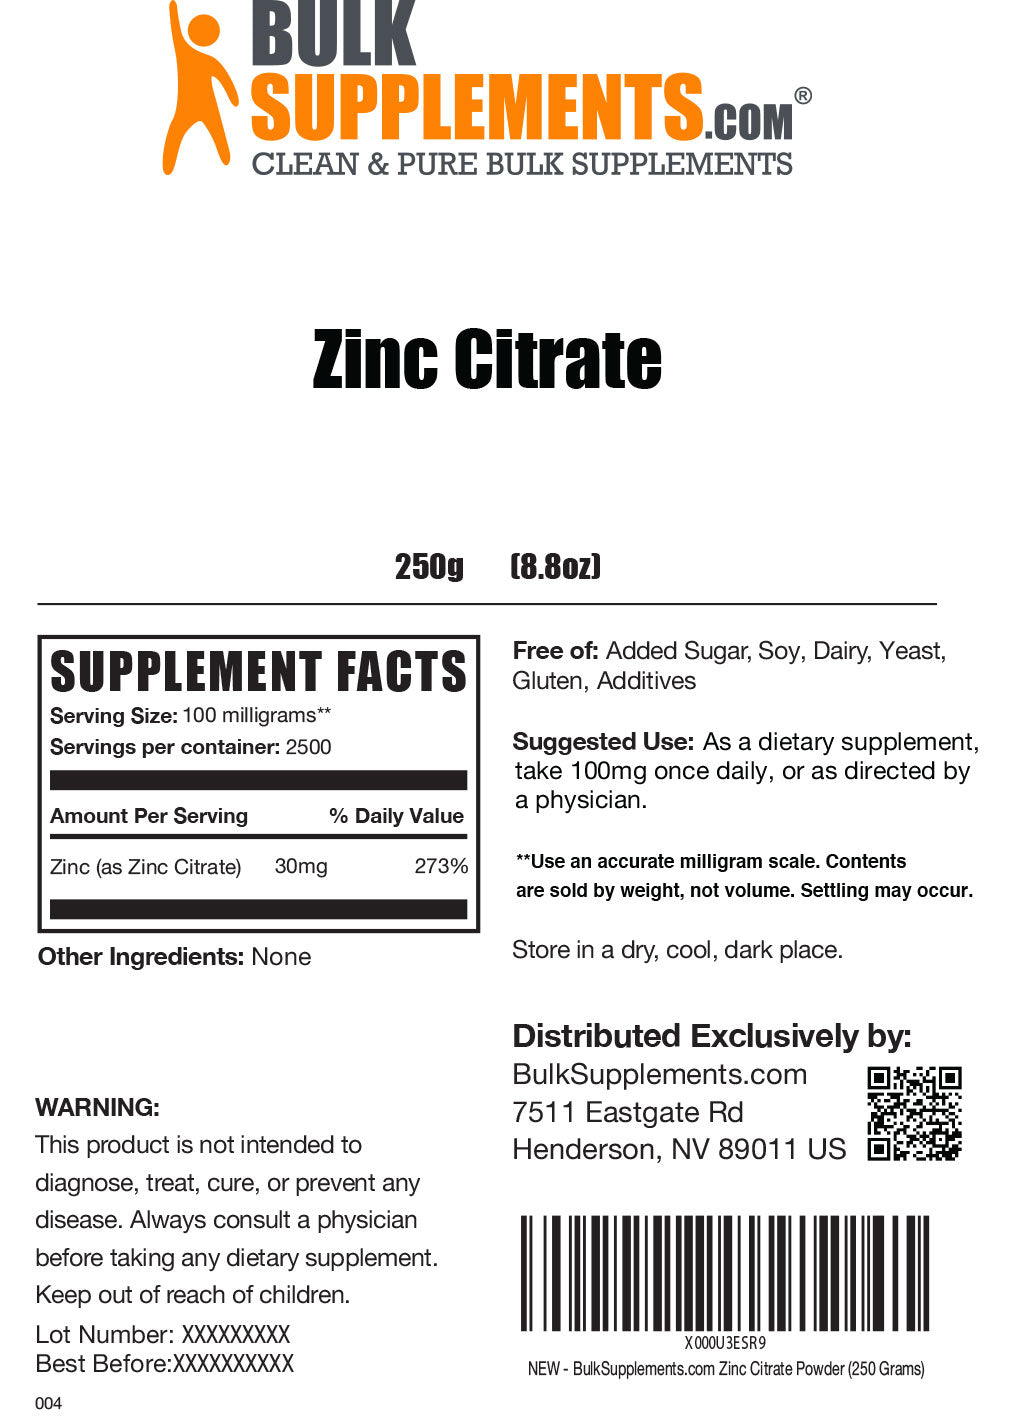 Zinc Citrate powder label 250g